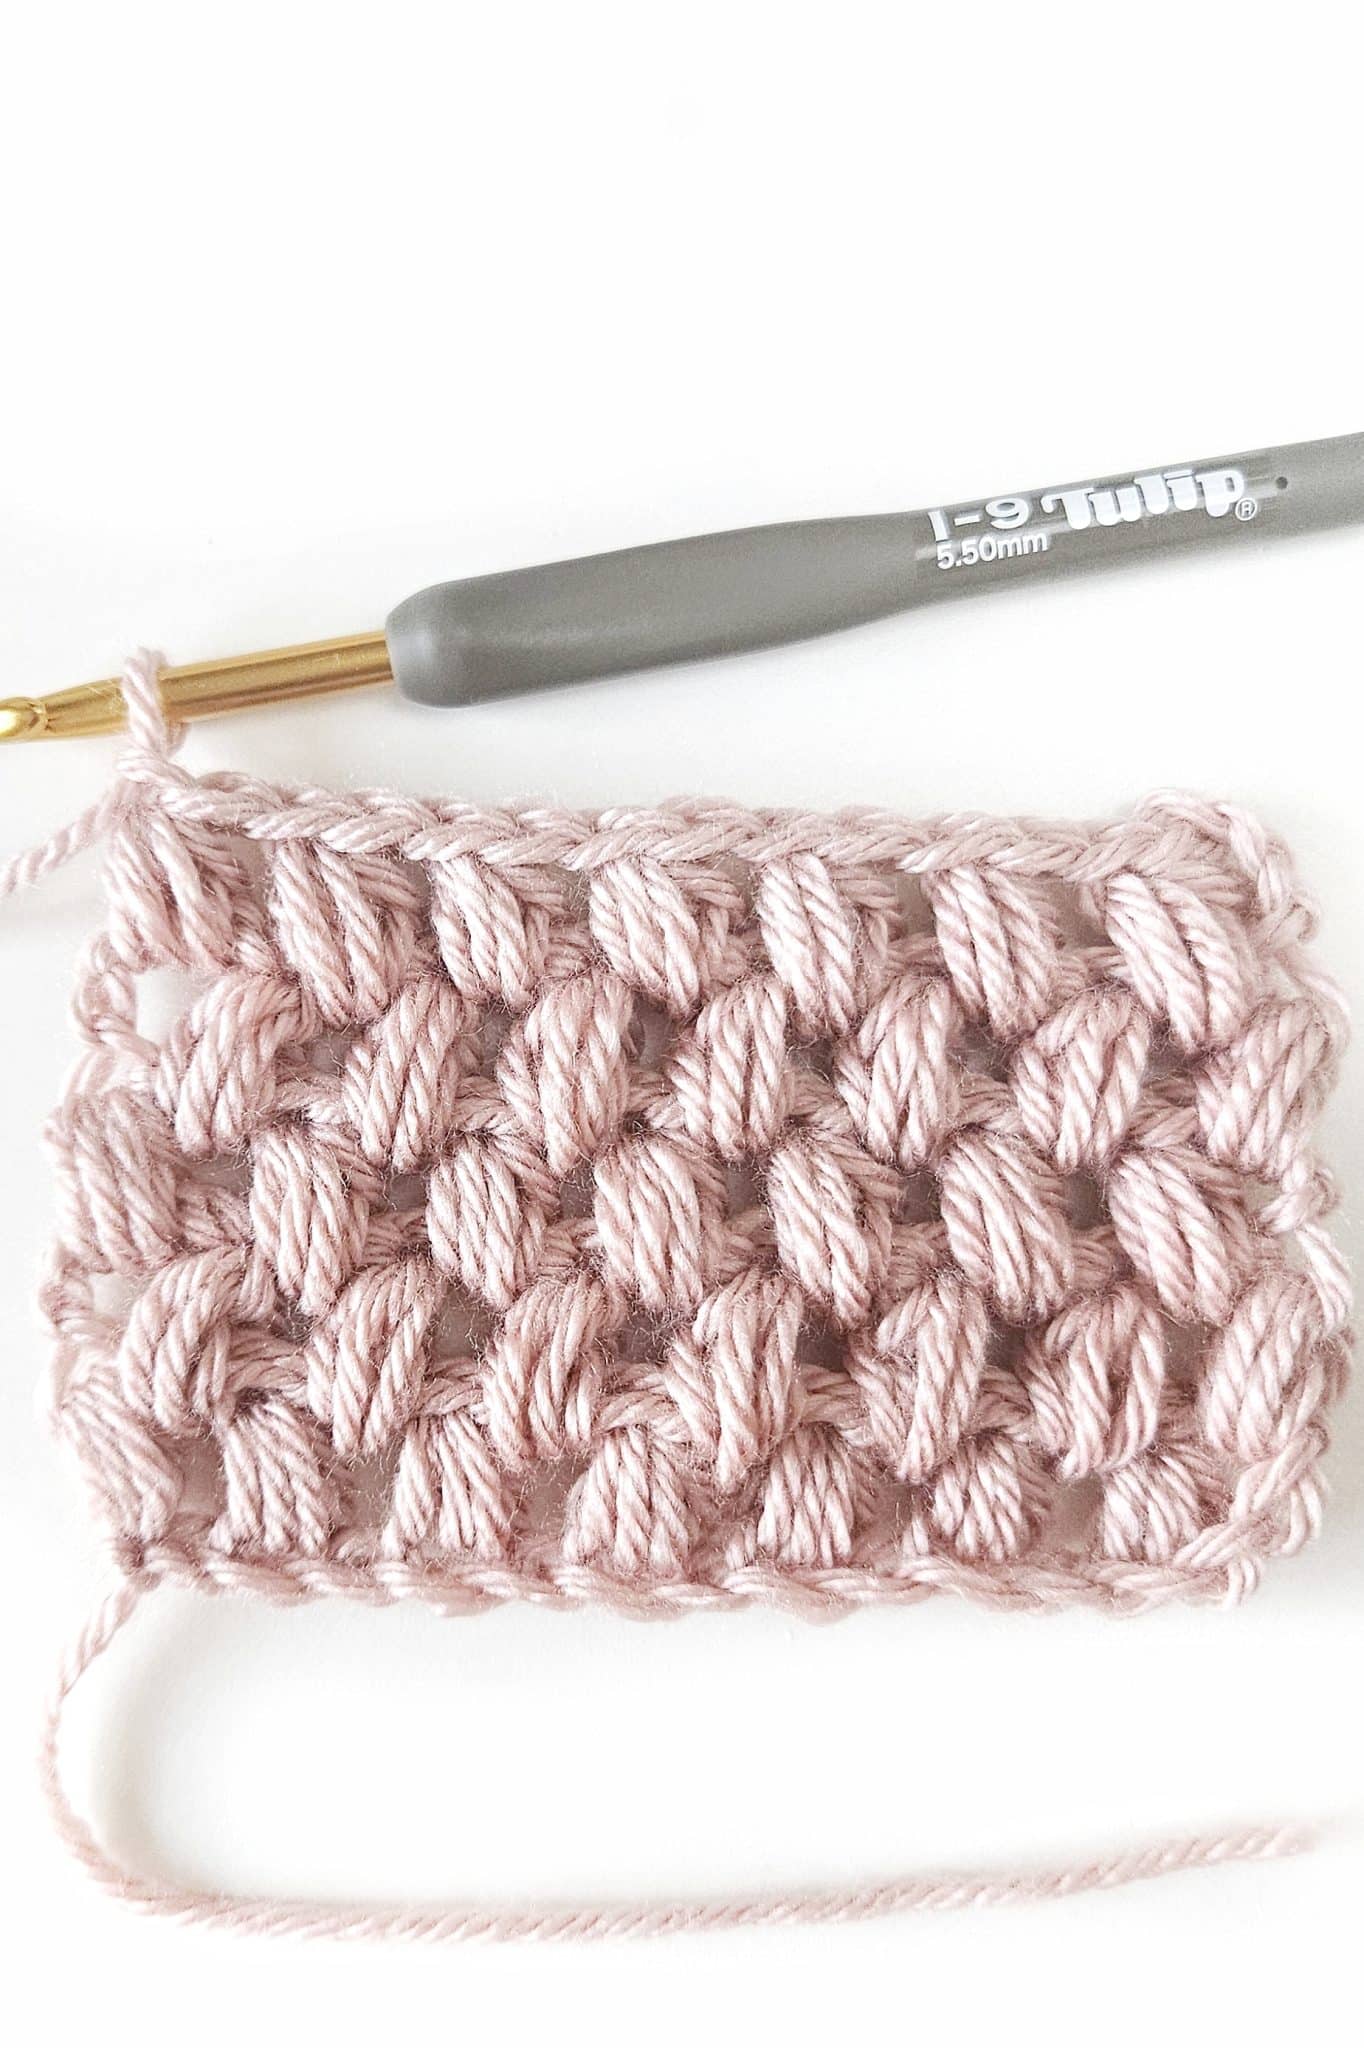 Puff stitch crochet tutorial 